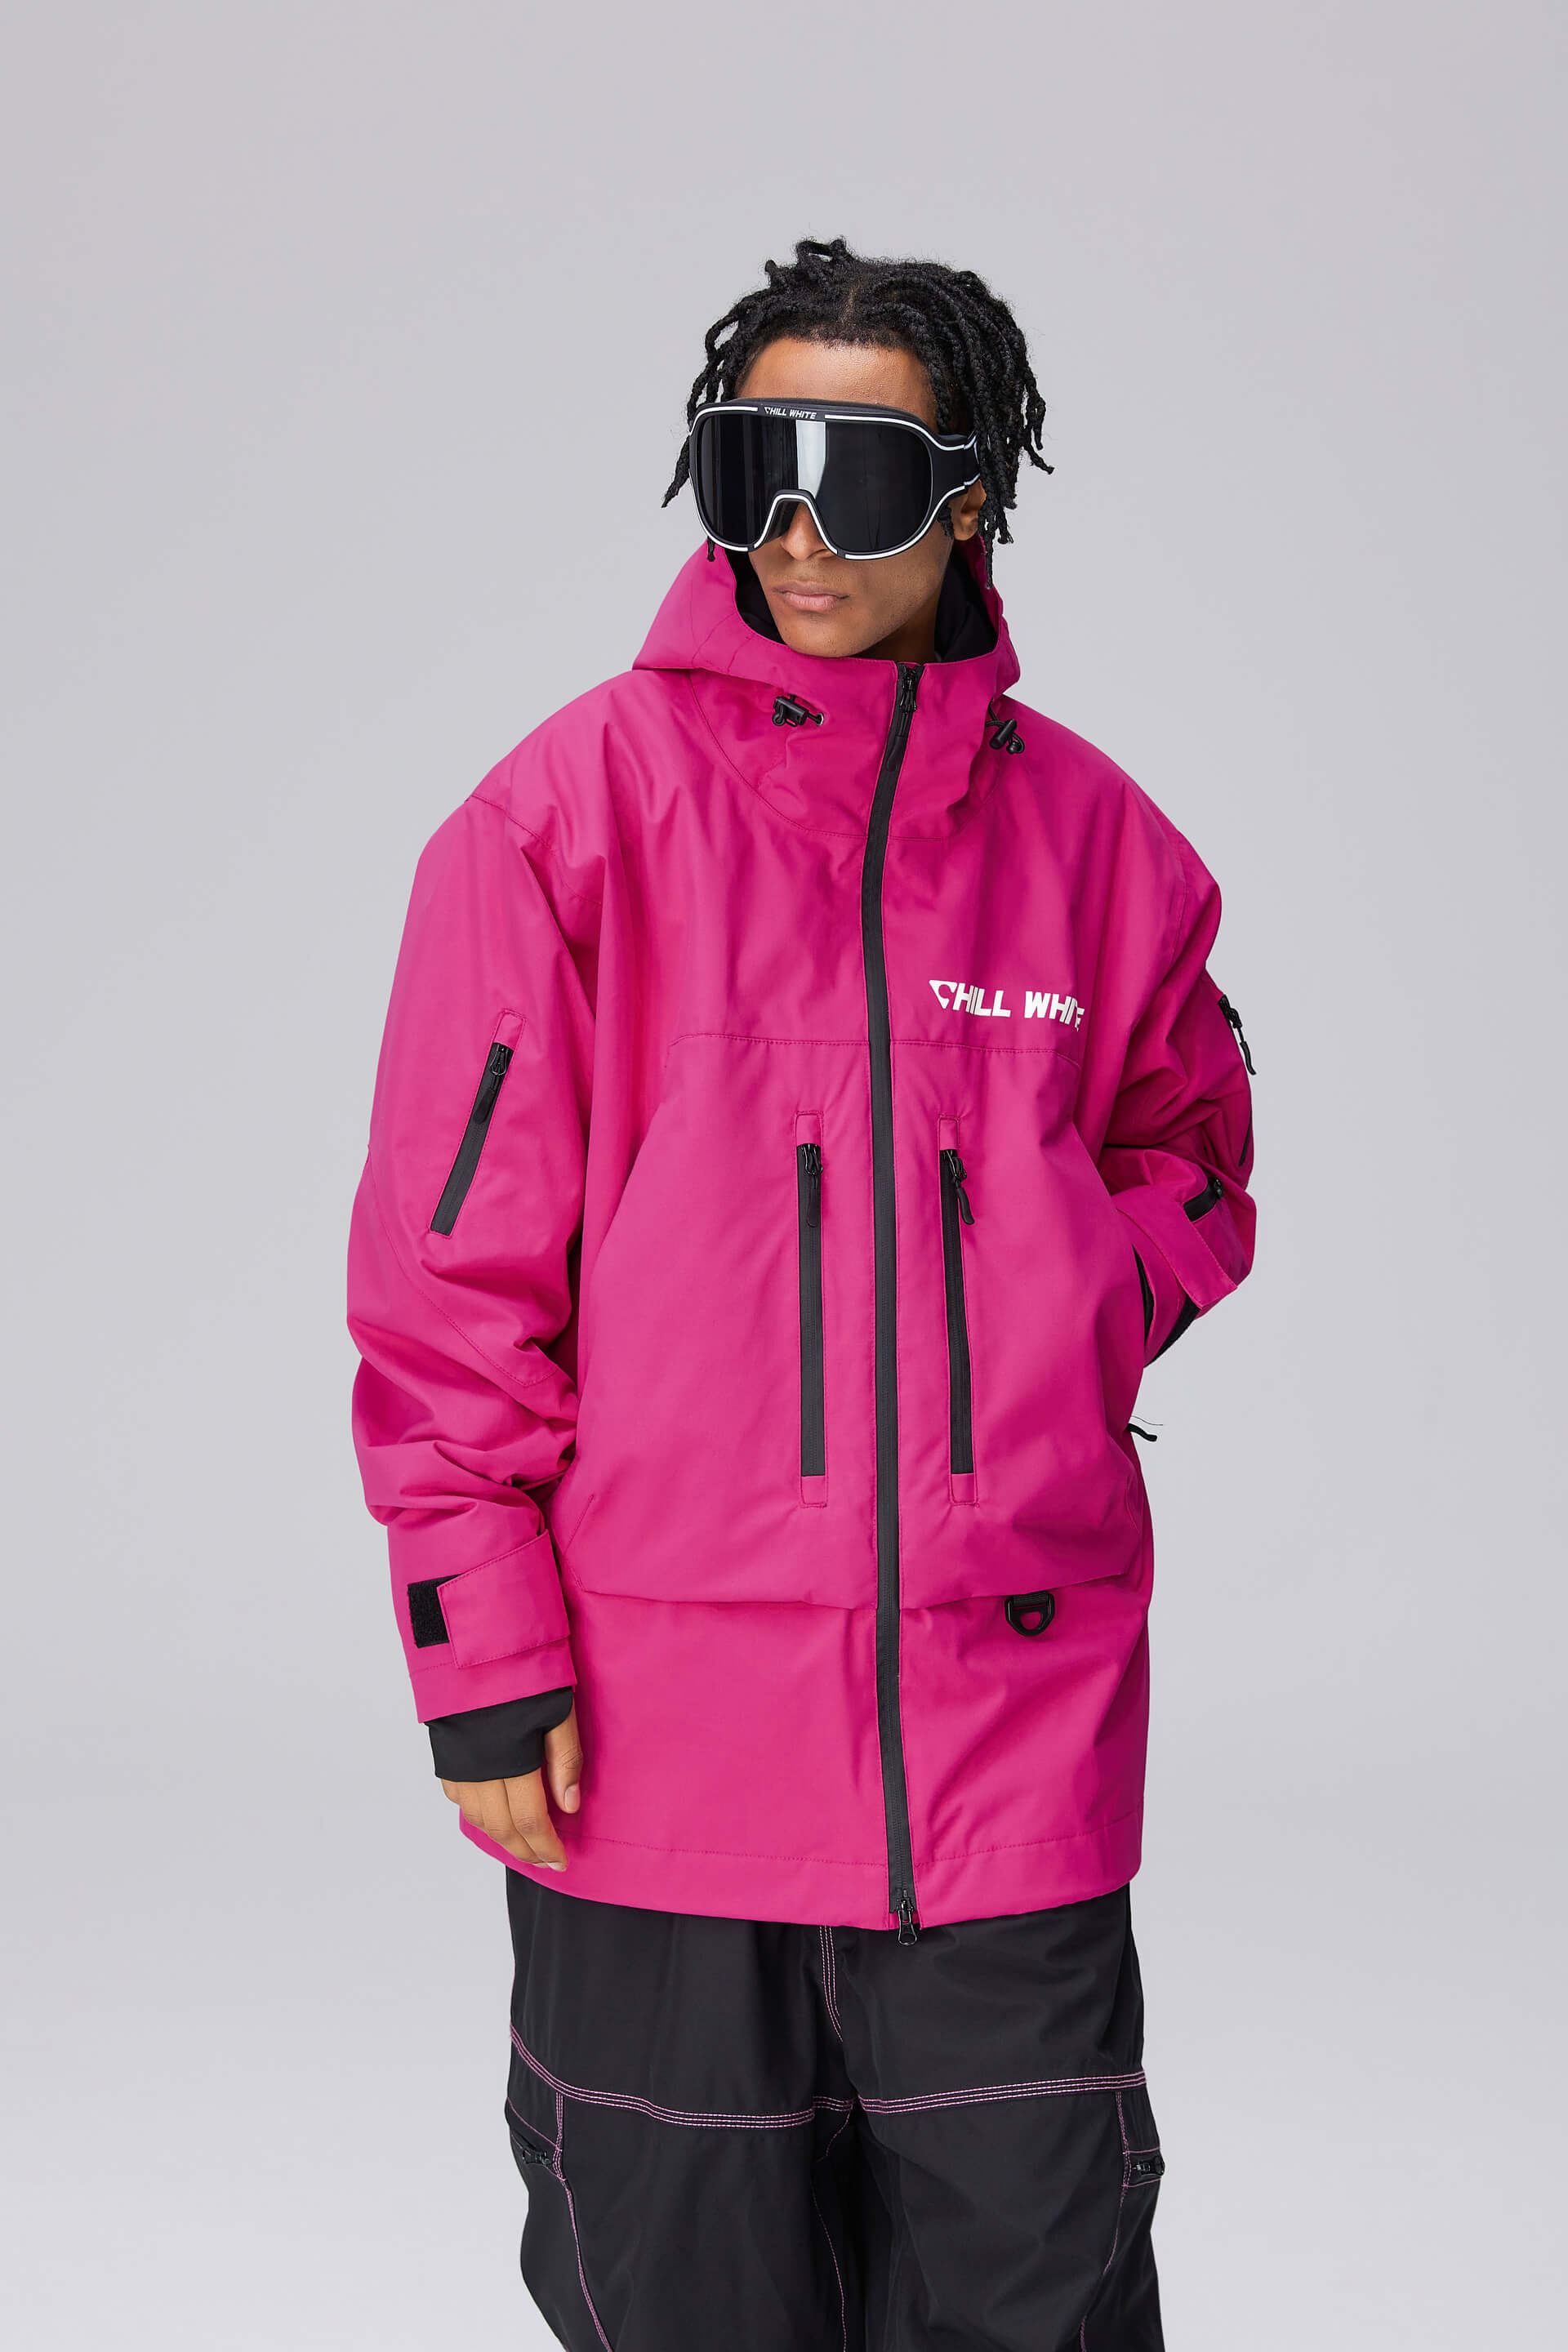 Unisex Hot Pink Snow Jacket